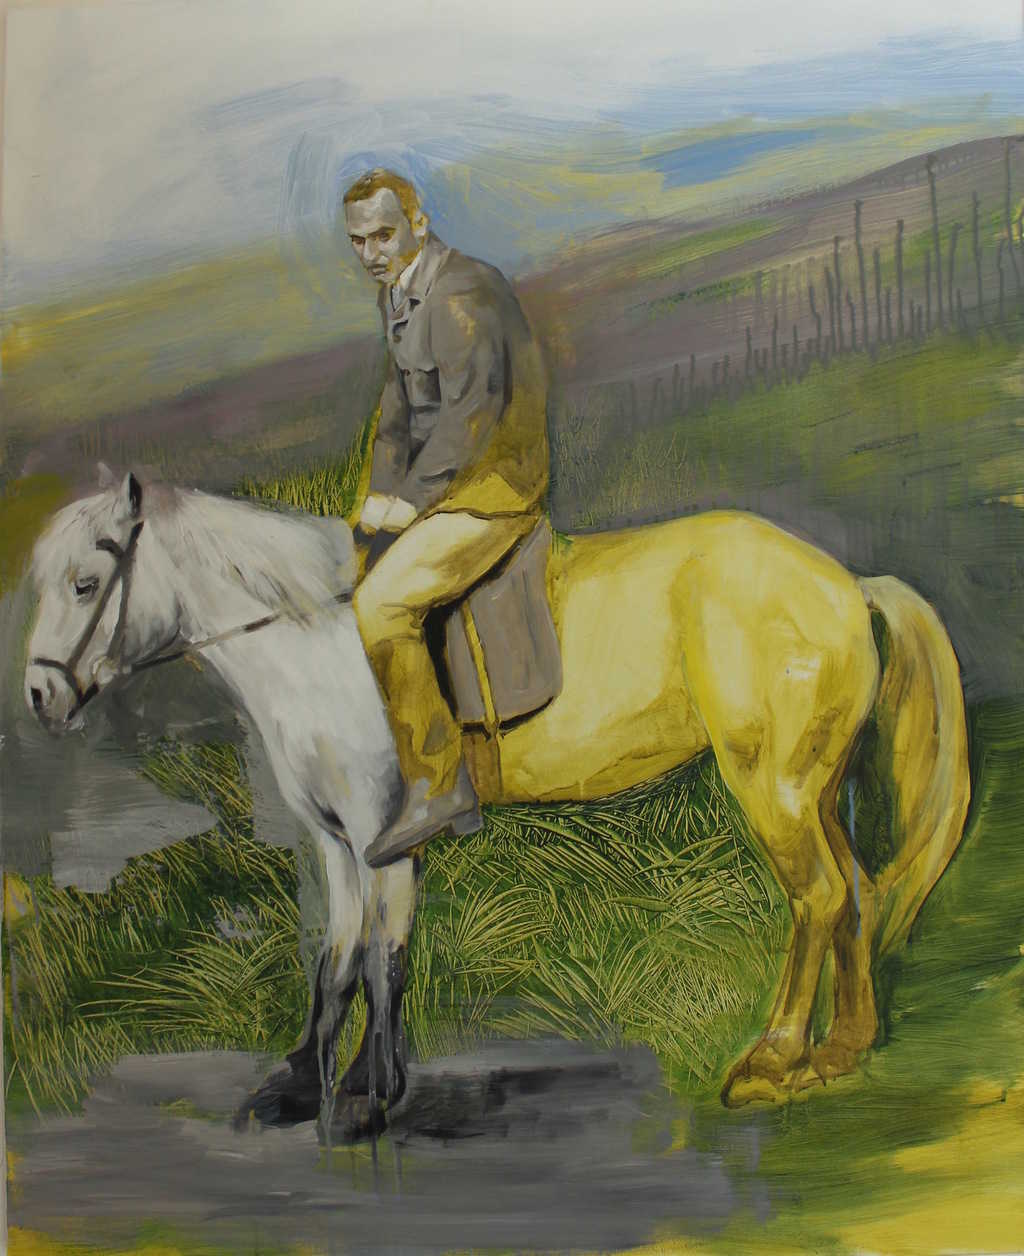 Laurent Joliton, The golden horse